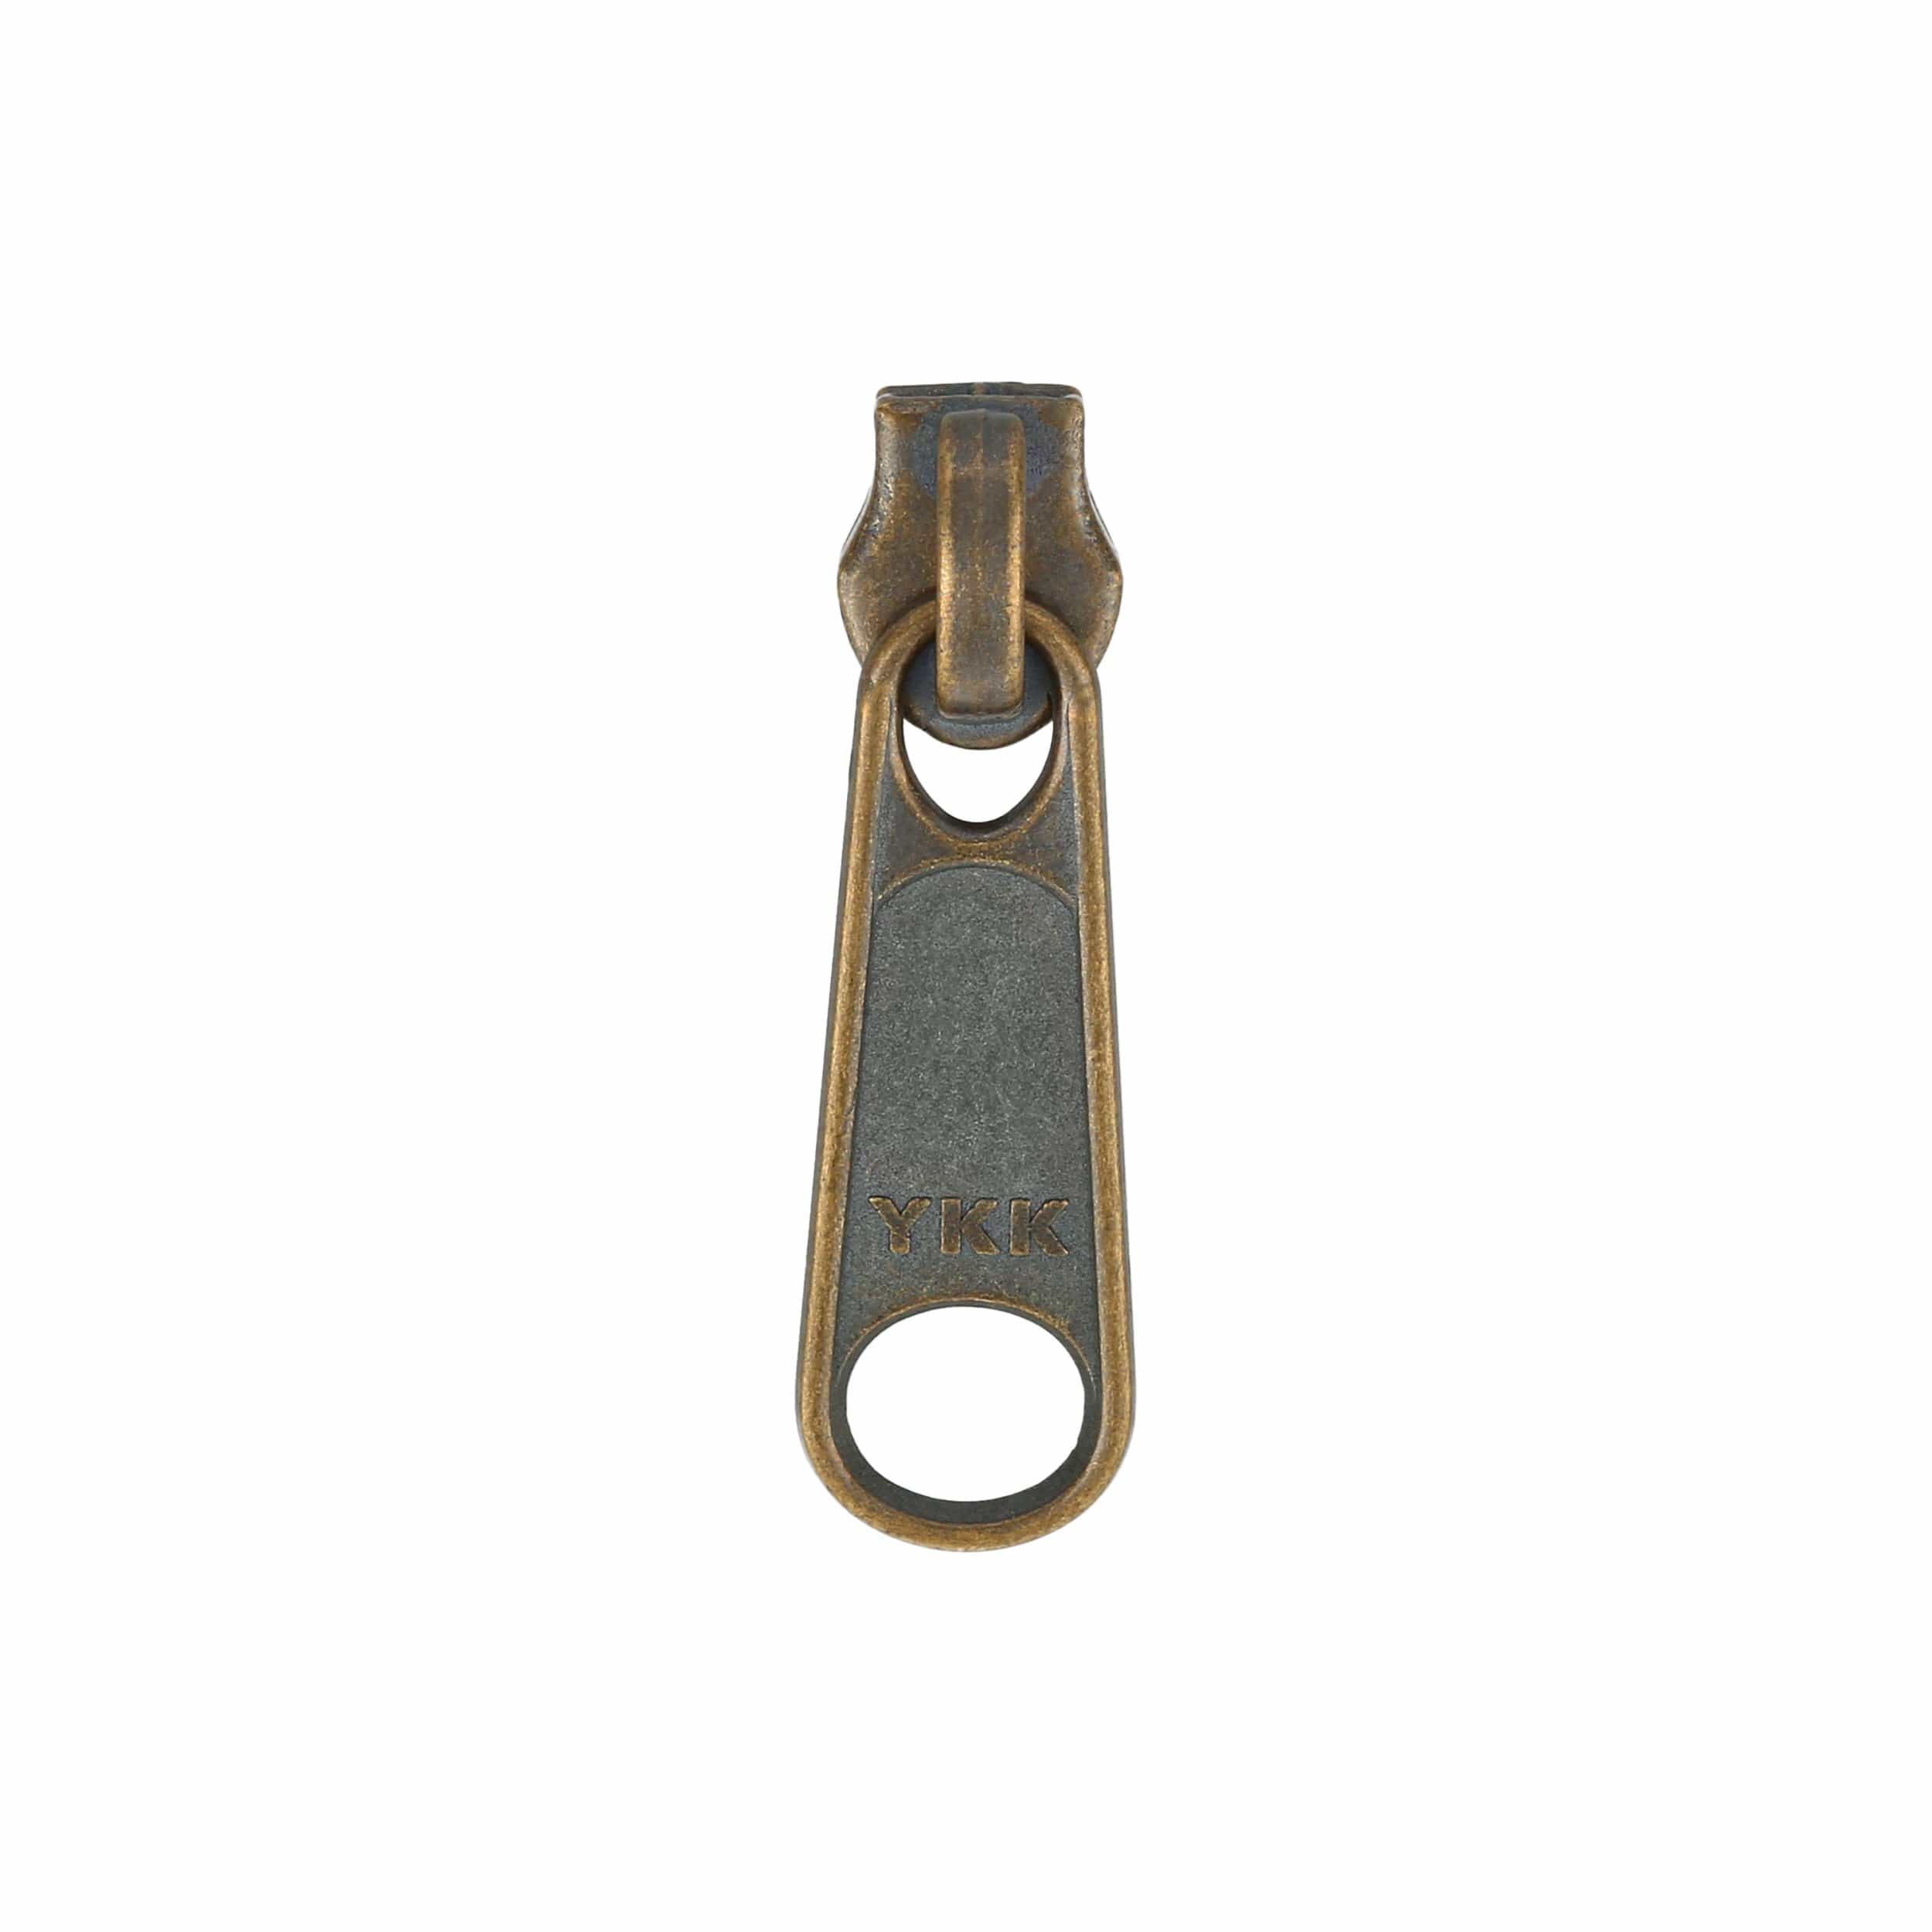 Ohio Travel Bag Zippers #4.5 Antique Brass, YKK Long Tab Swivel Slider, Zinc Alloy, #4.5C-1-ANTB 4.5C-1-ANTB